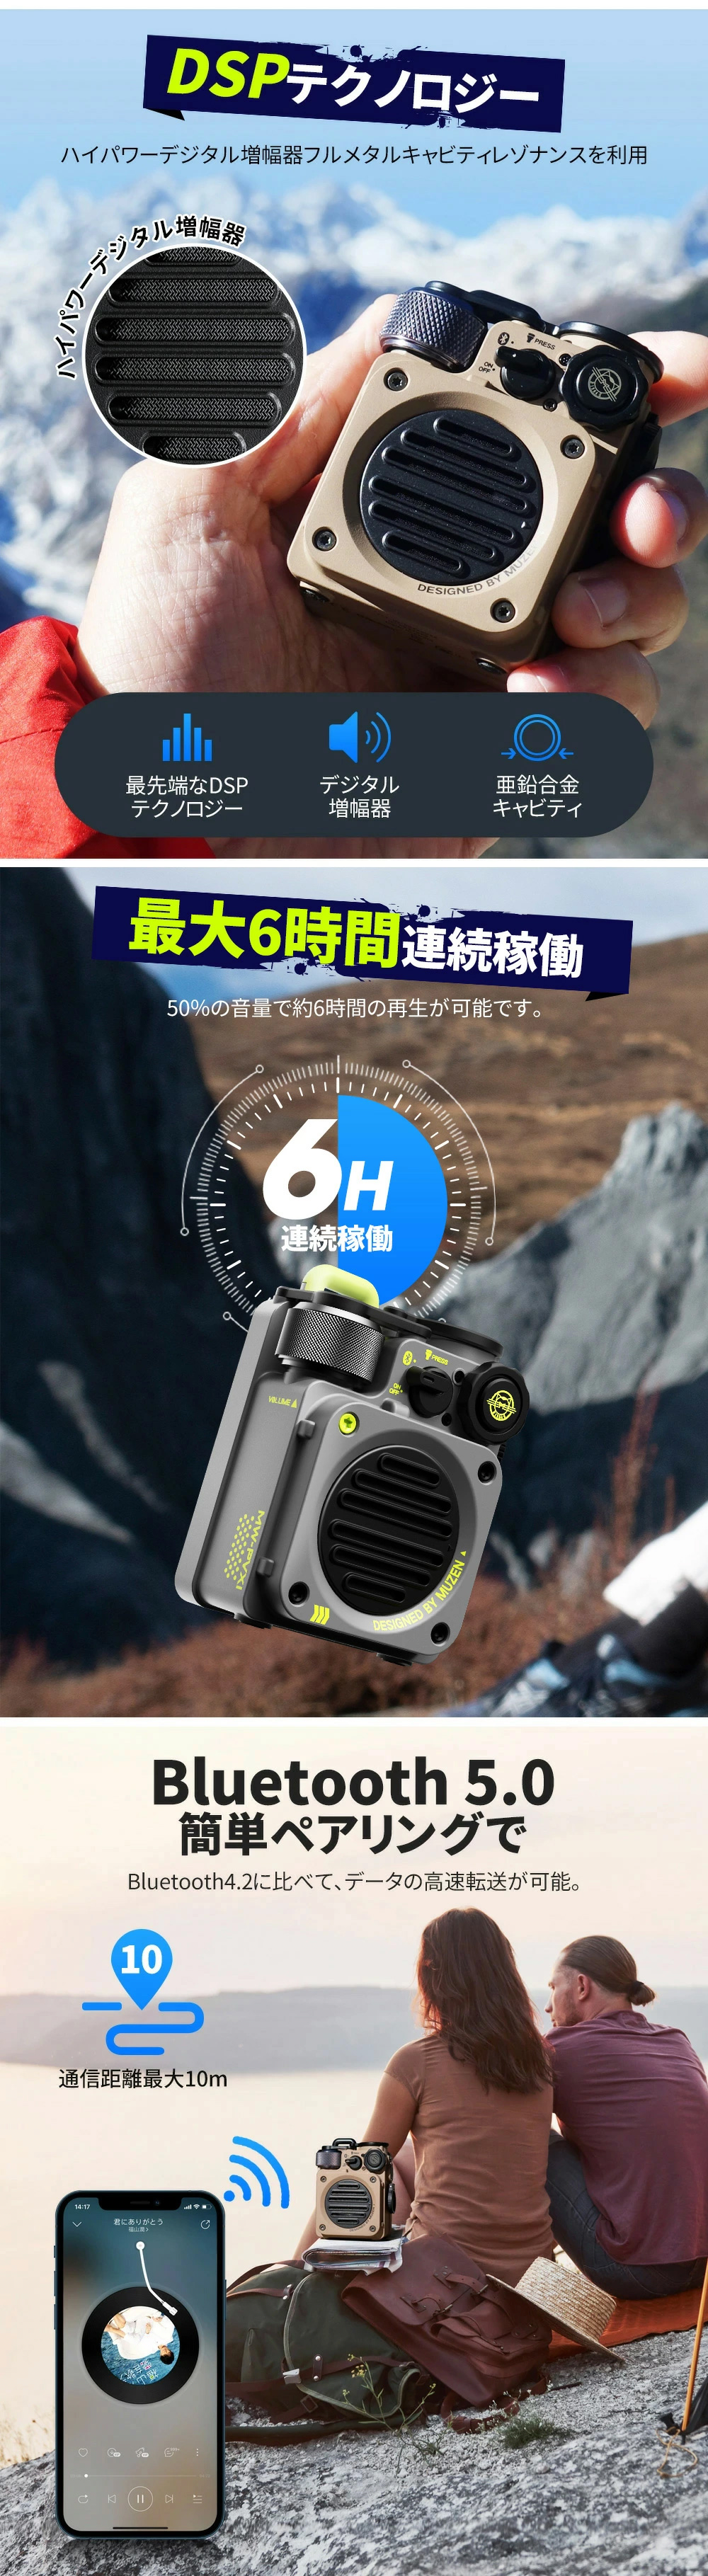  MUZEN スピーカー bluetooth 高音質 ワイヤレススピーカー IPX5防水 おしゃれ 高級 USB充電小型 アウトドア 登山 キャンプ 車載用 